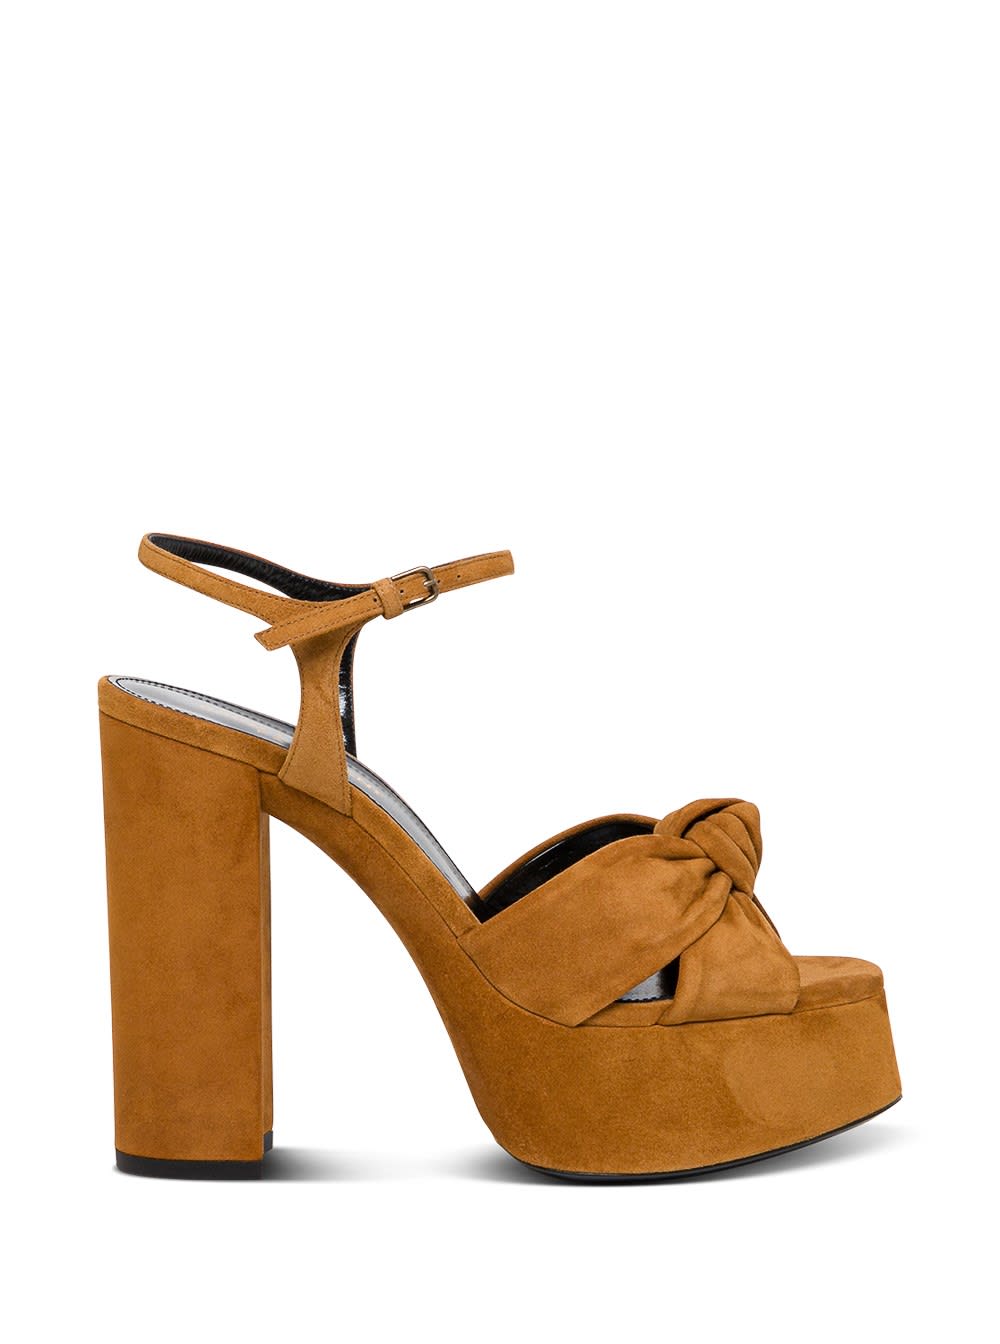 Buy Saint Laurent Bianca Suede Leather Sandals (price in US$) Online ...